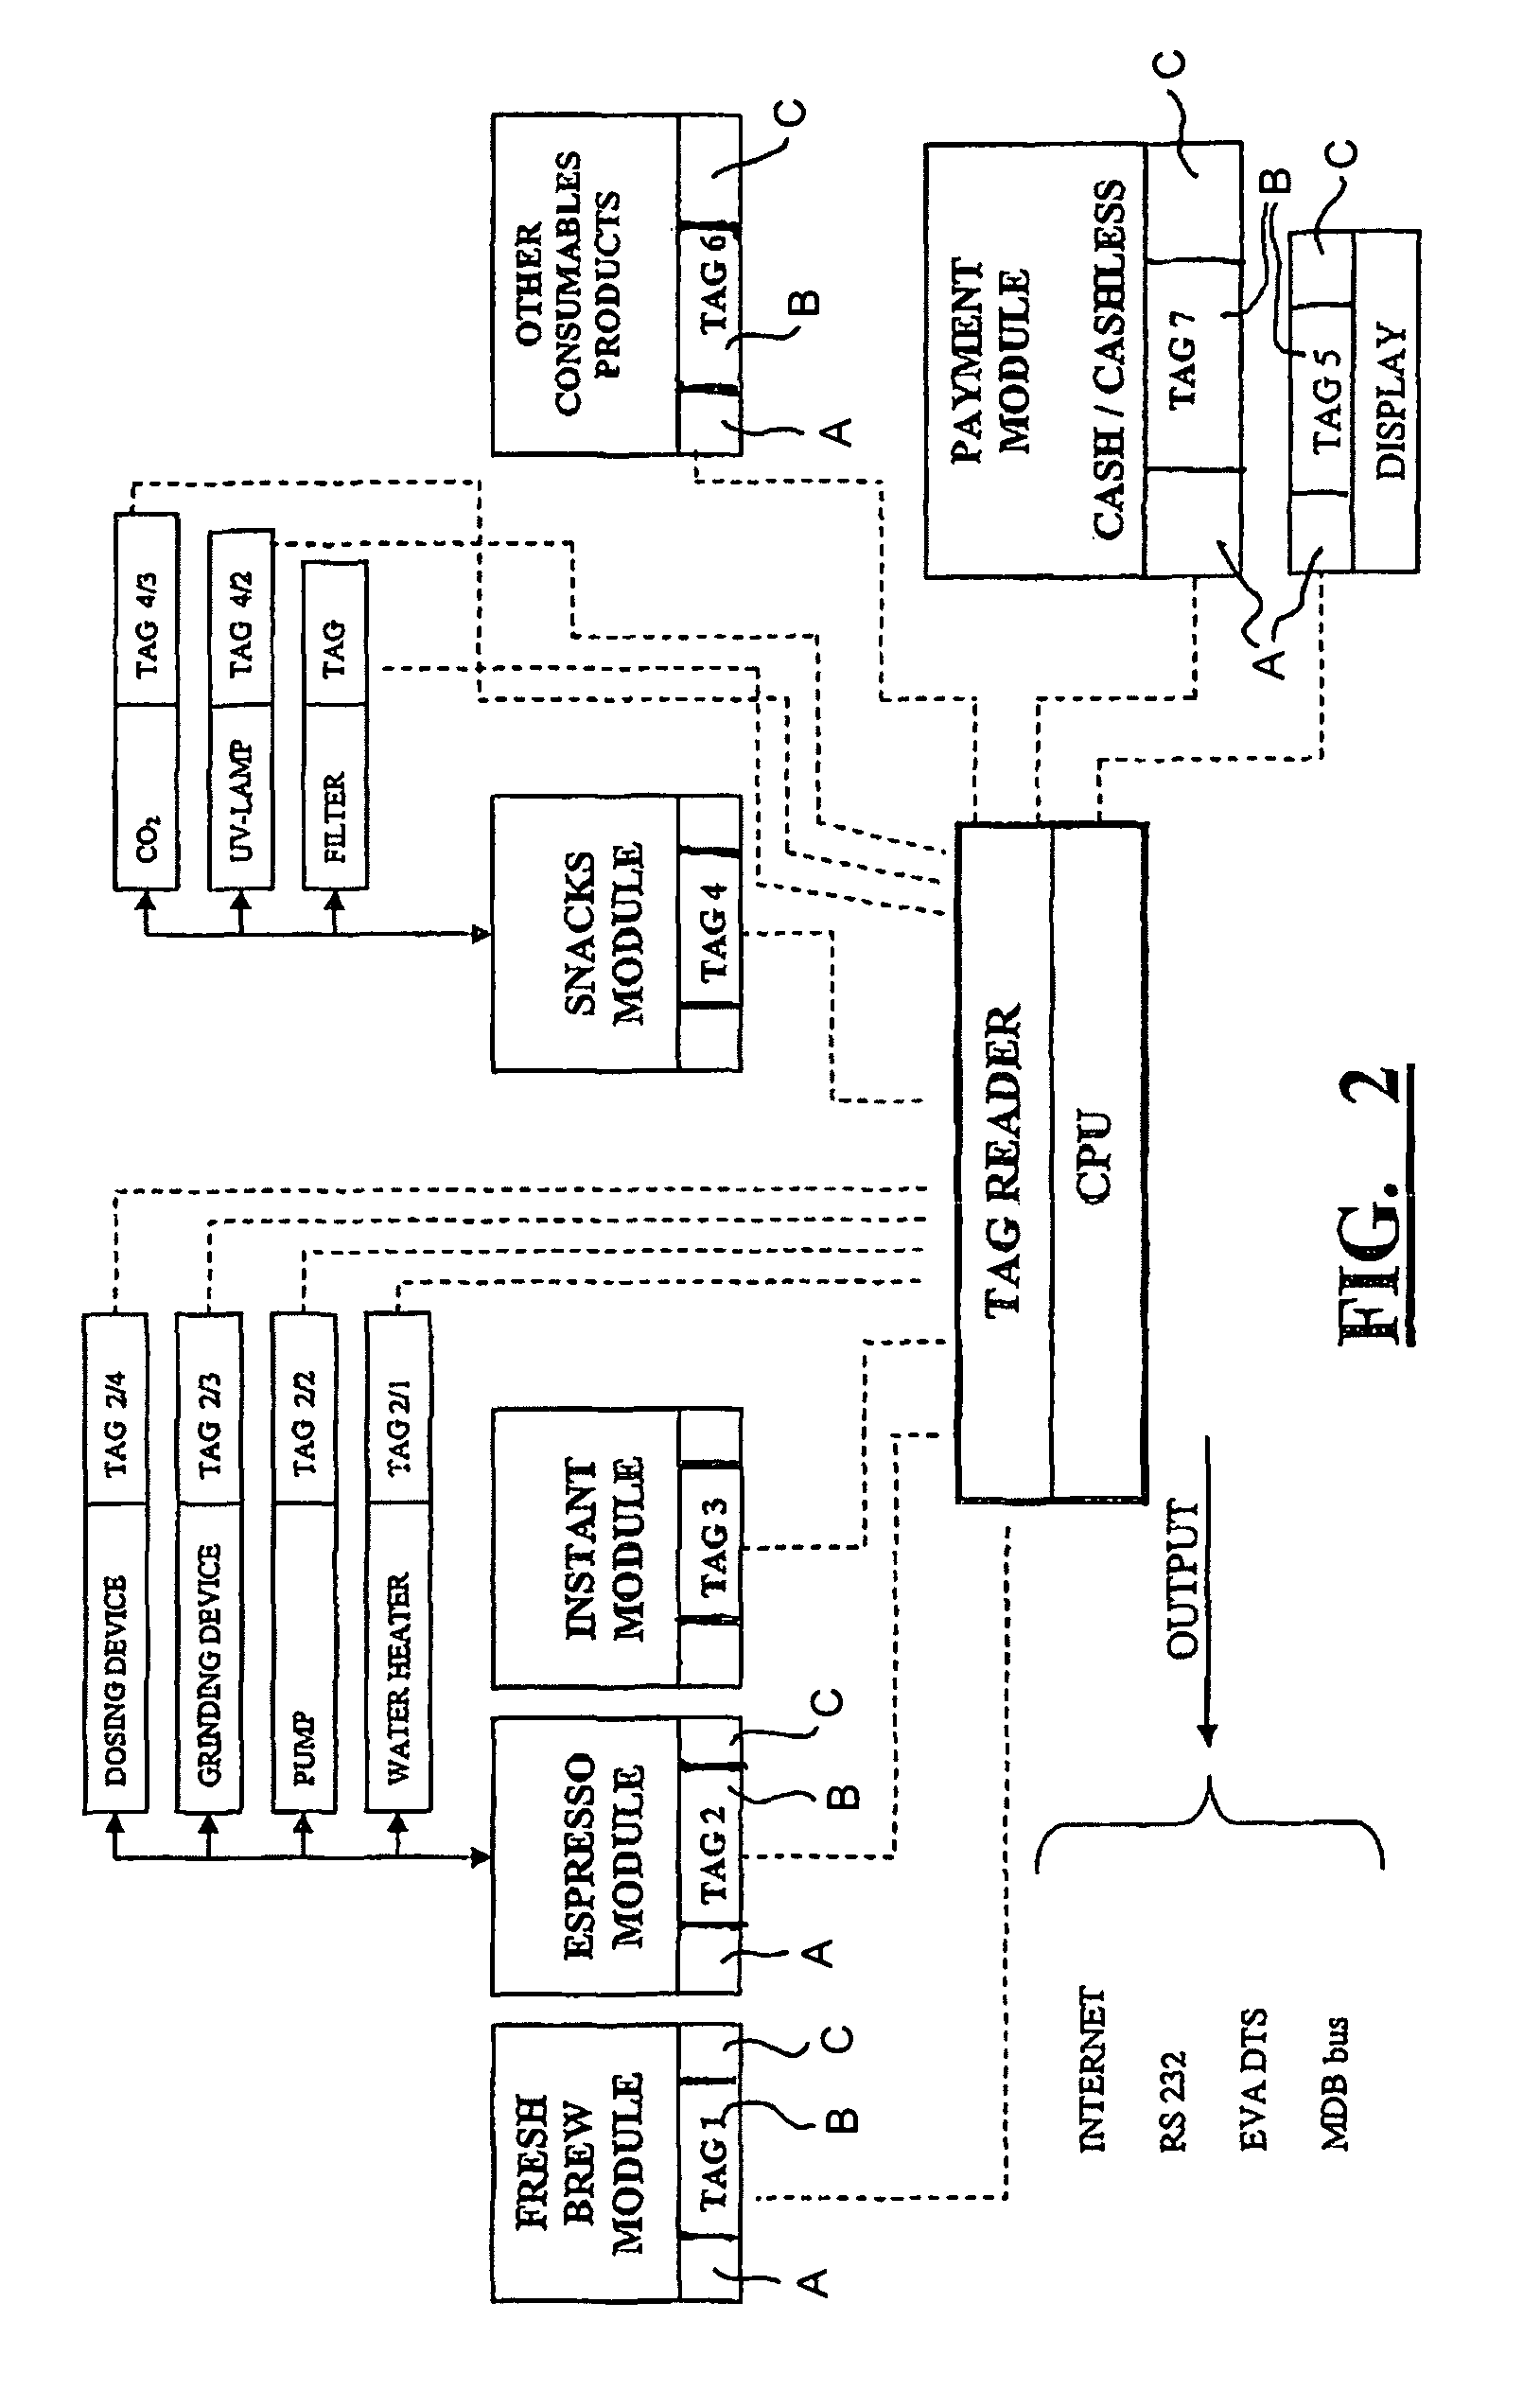 Apparatus and method for dispensing machine control